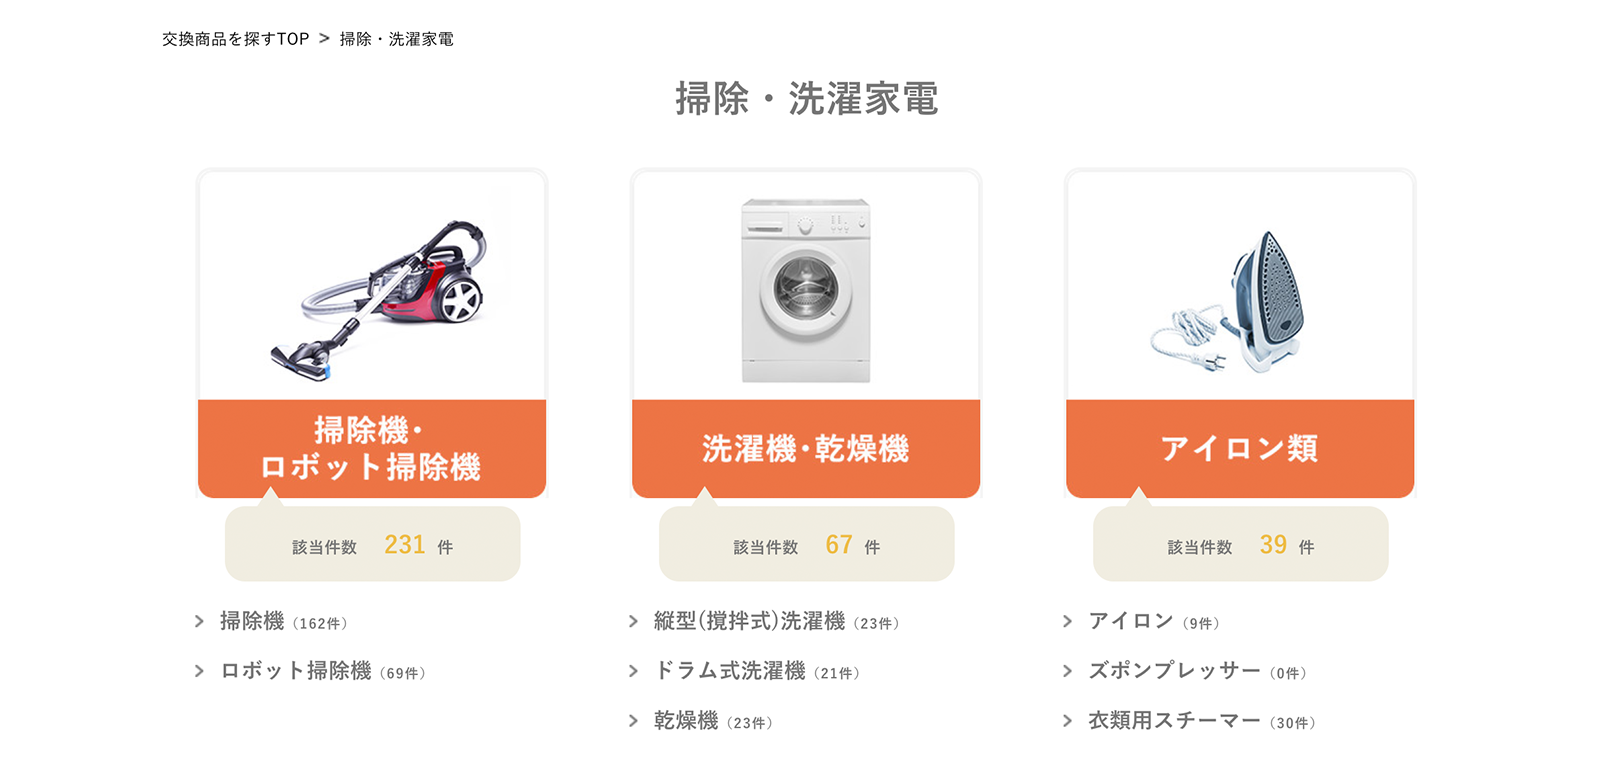 https://goods.jisedai-points.jp/jjp01/jjp/viewCategoryTop 2019年8月9日最終アクセス